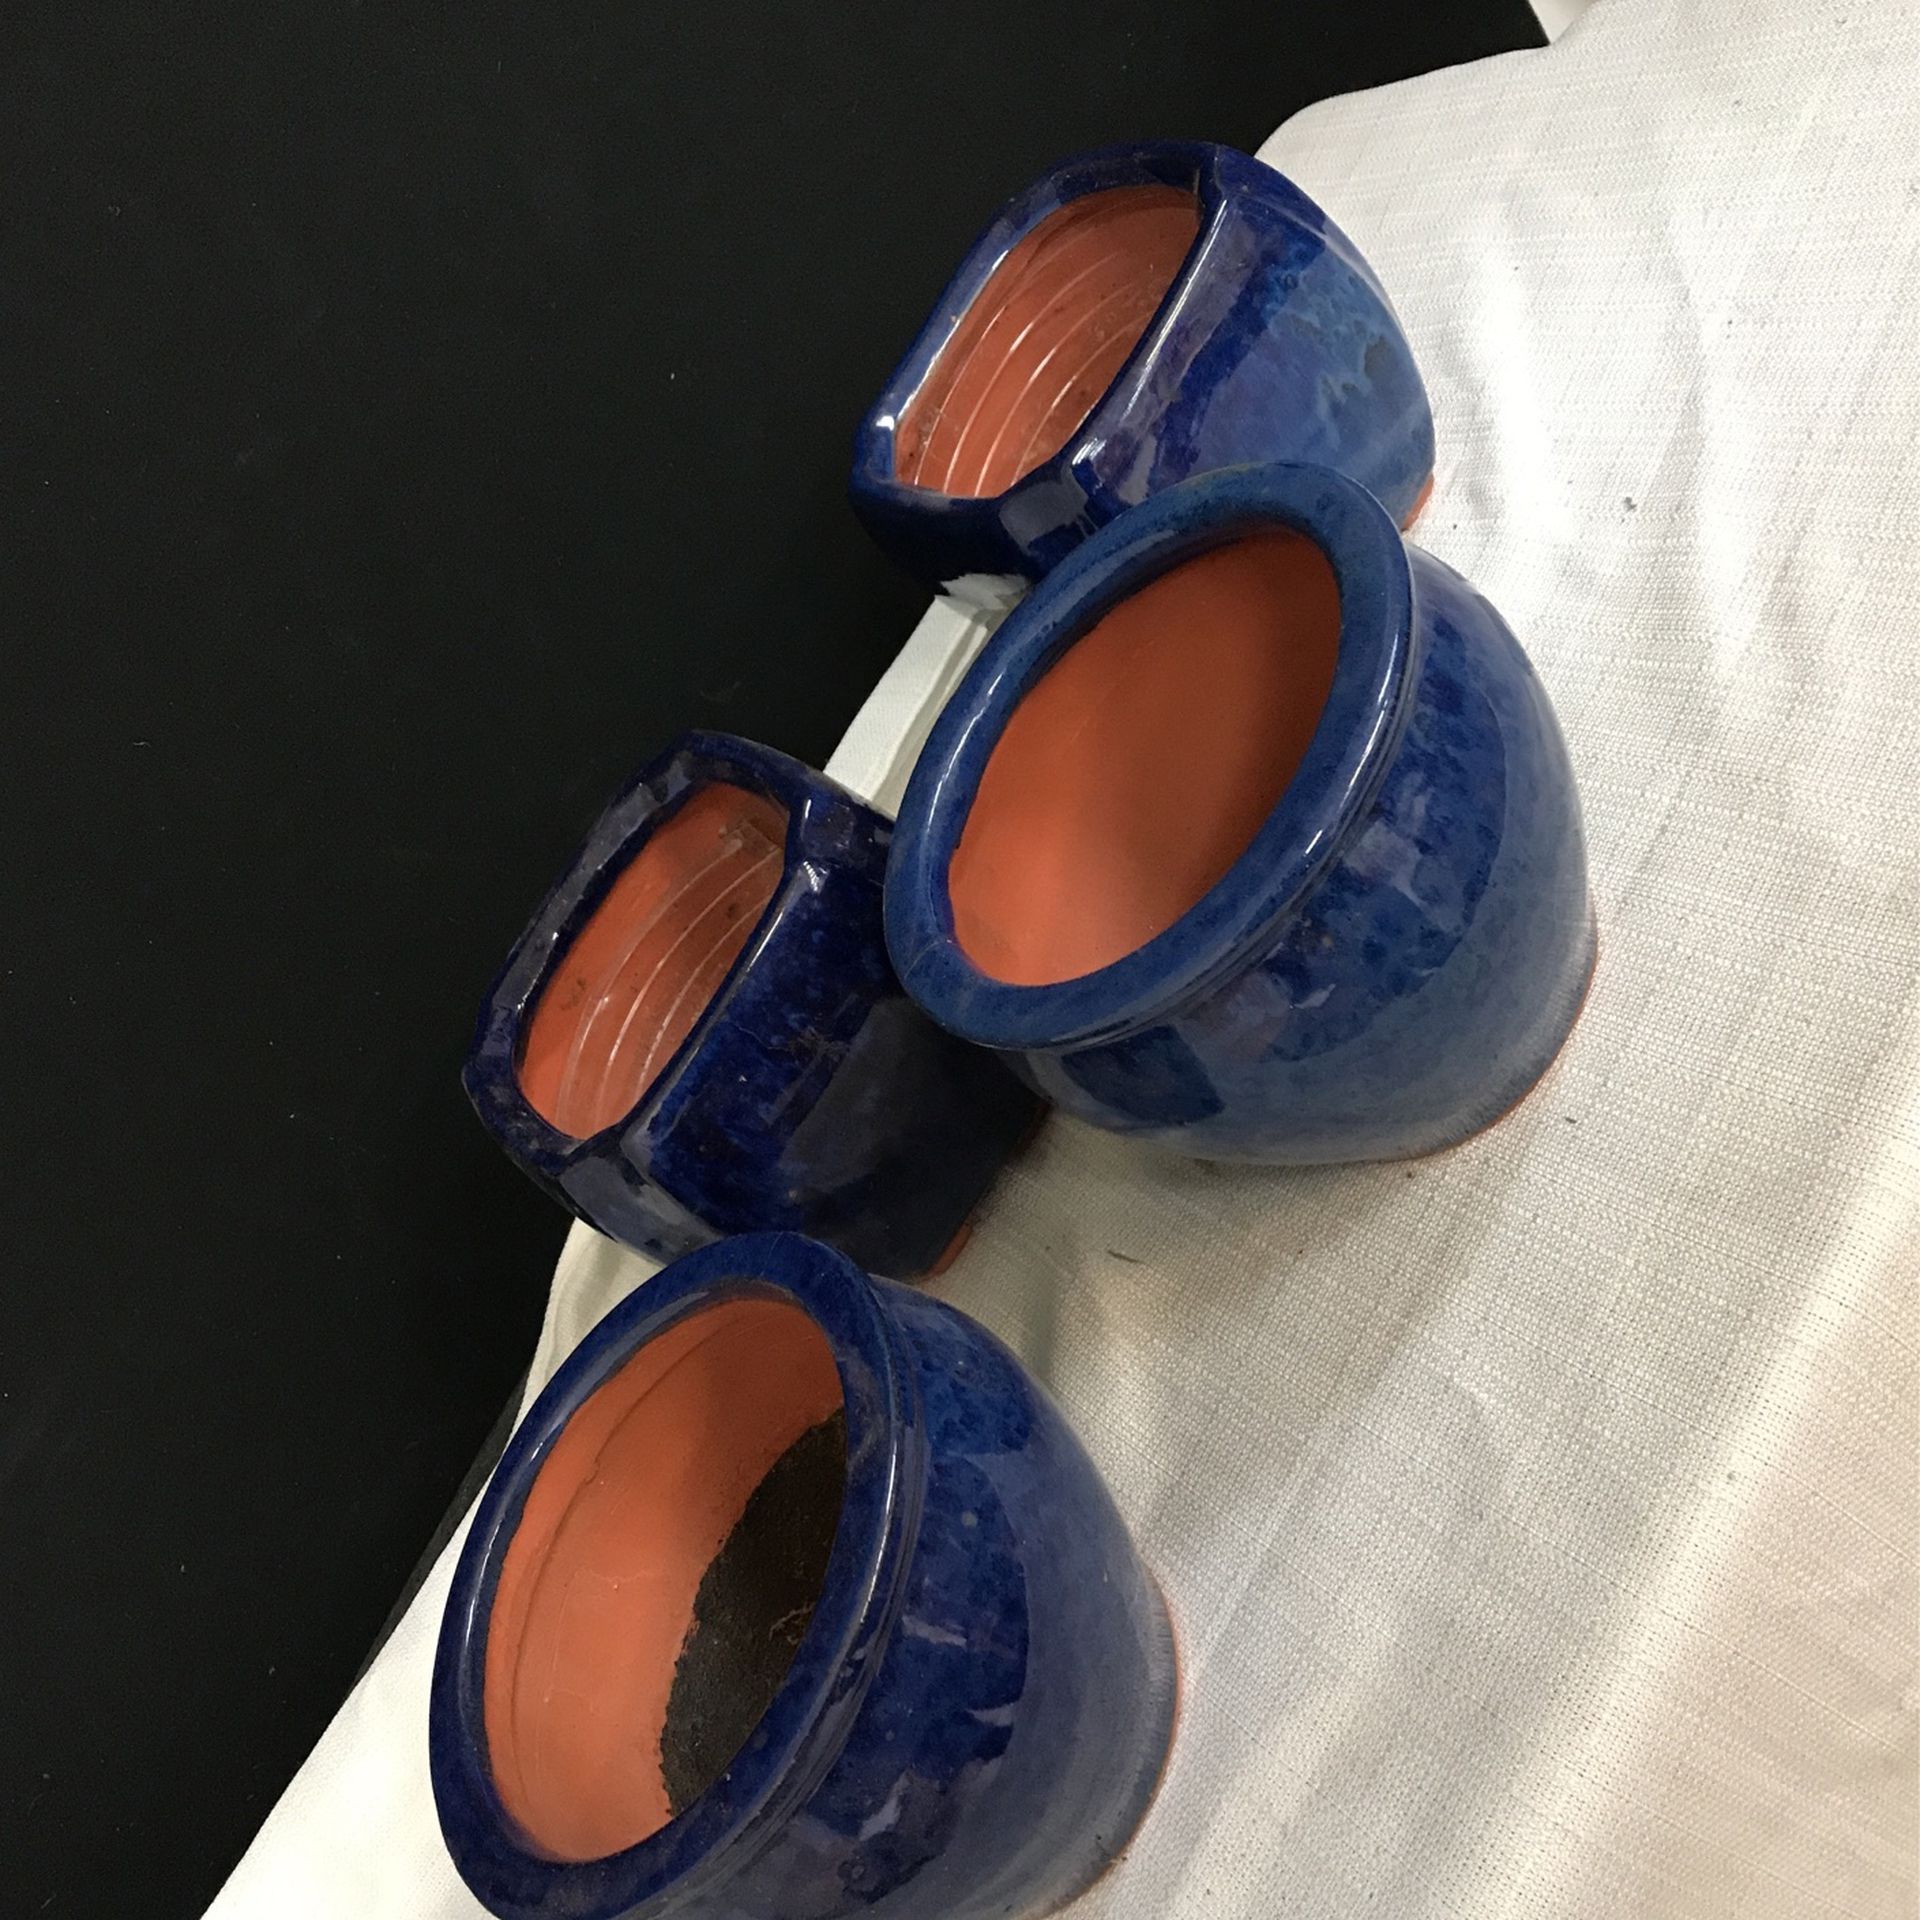 4 Blue Ceramic Pots